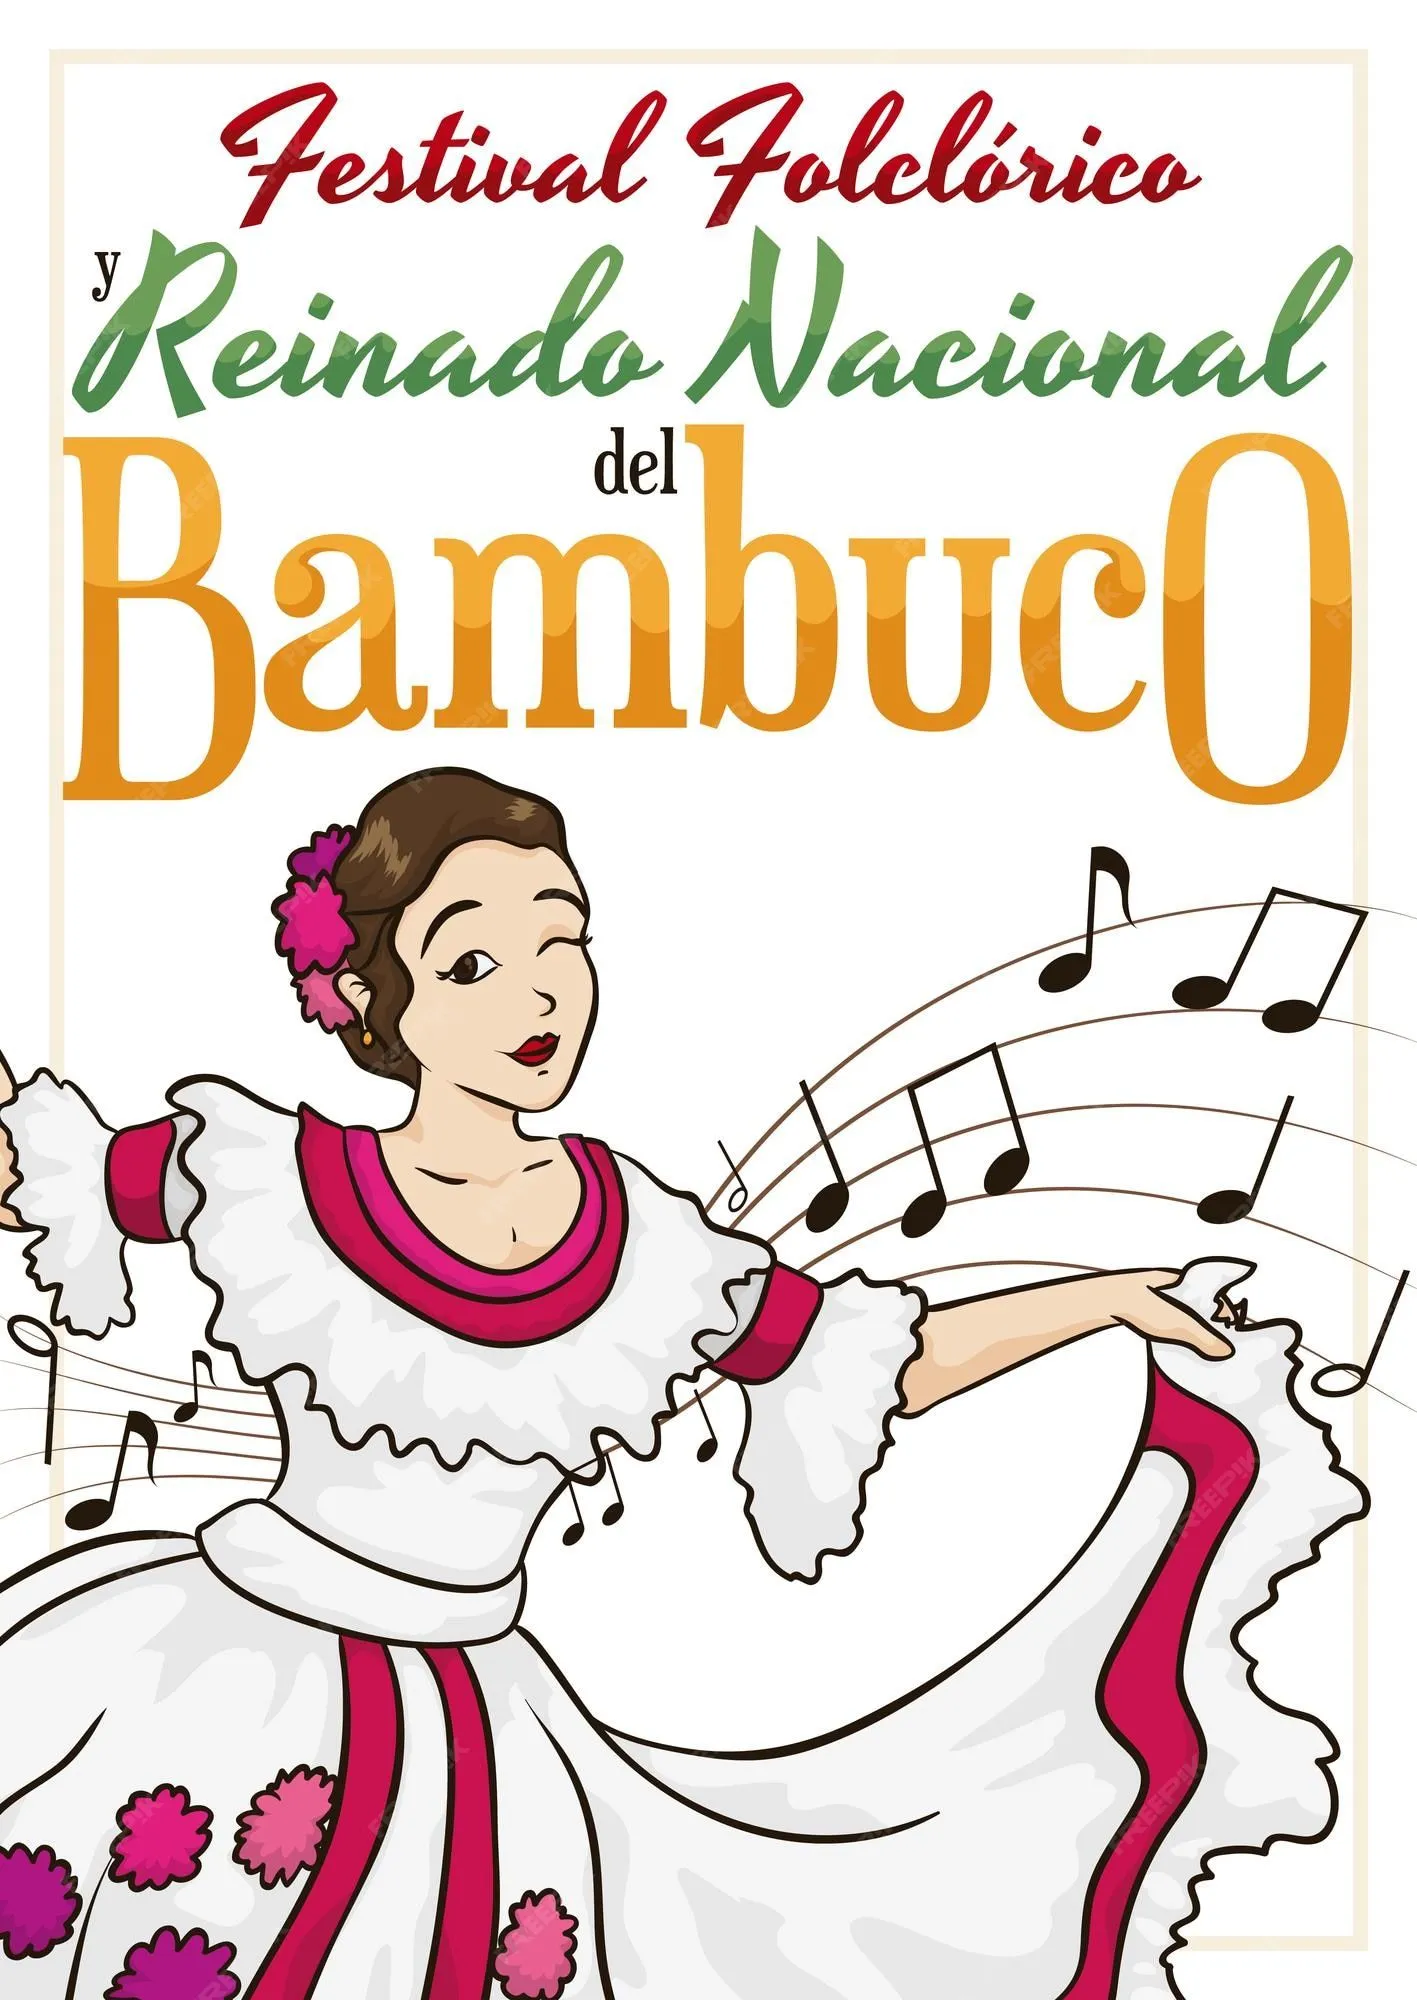 Hermosa reina colombiana para festival folklórico y concurso bambuco |  Vector Premium